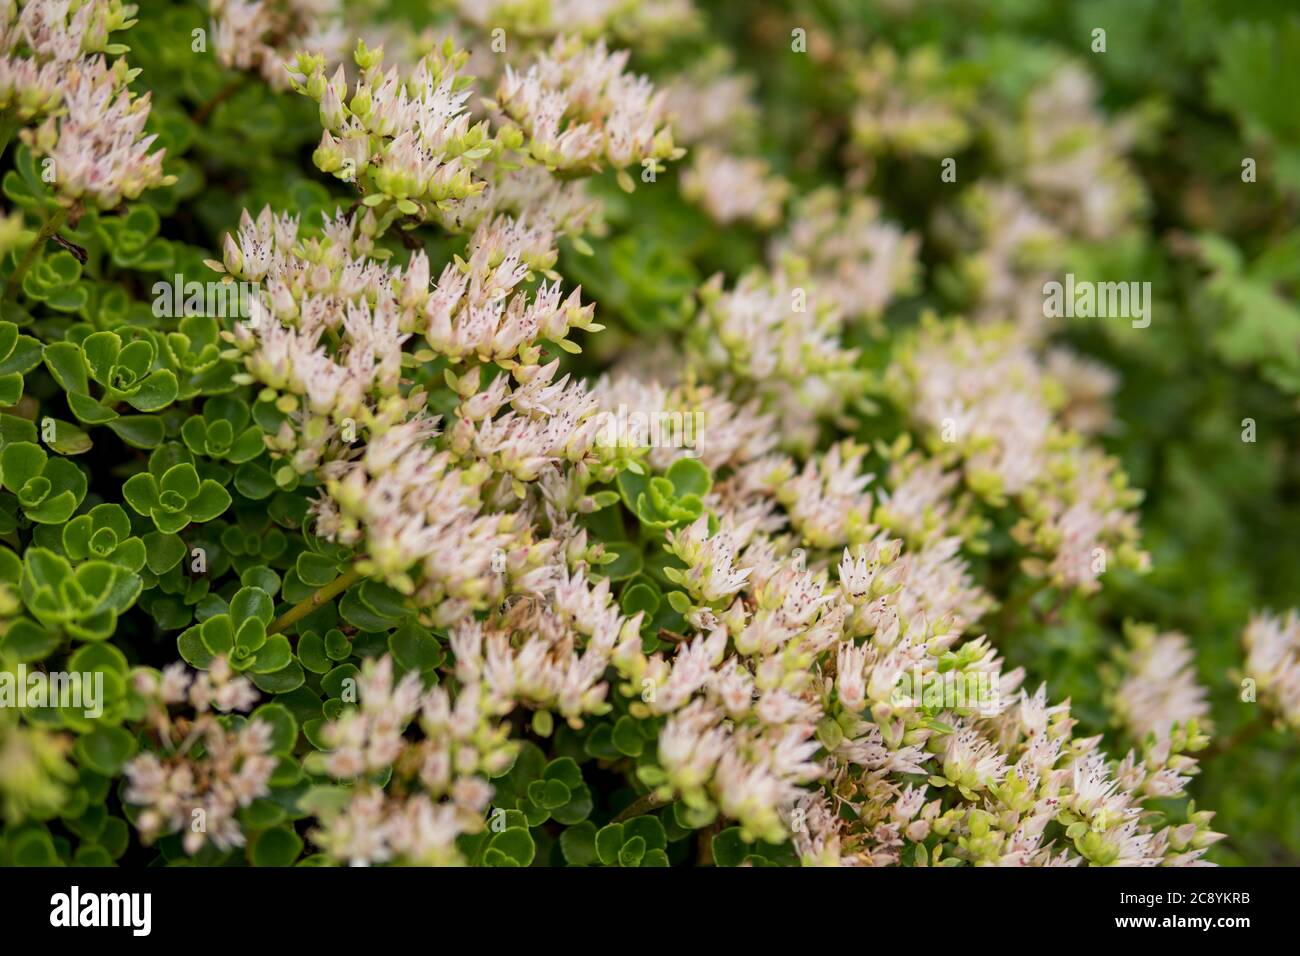 detail of Sedum spurium growing in a garden during summer season Stock Photo